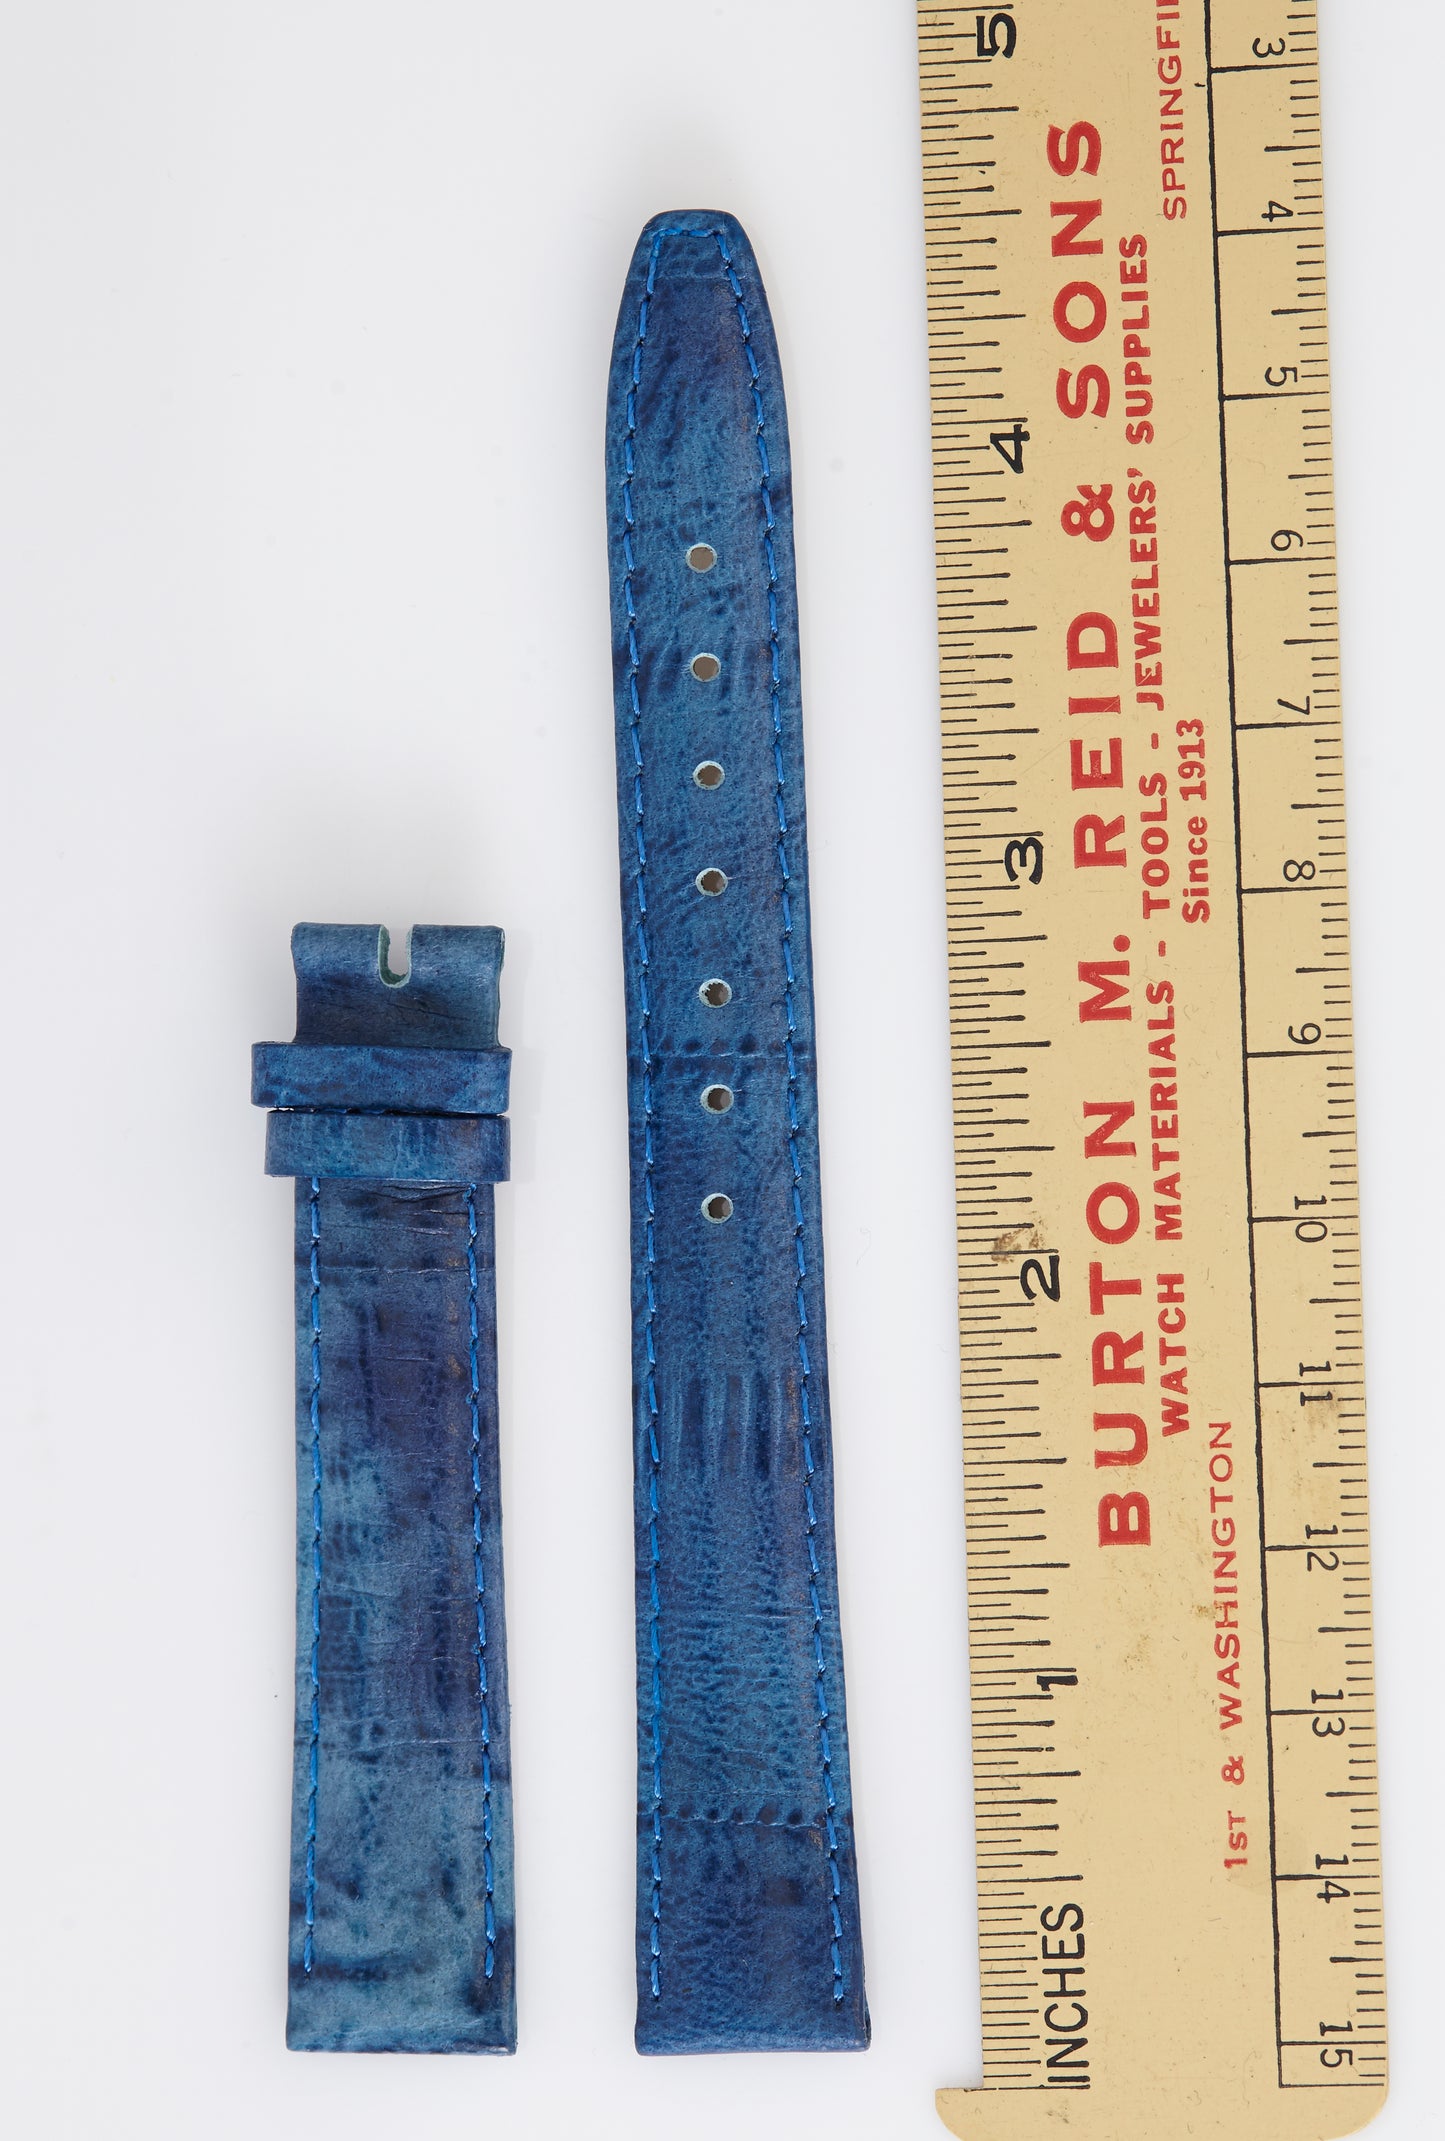 Ecclissi 14mm x 12mm Blue Leather Strap 22570